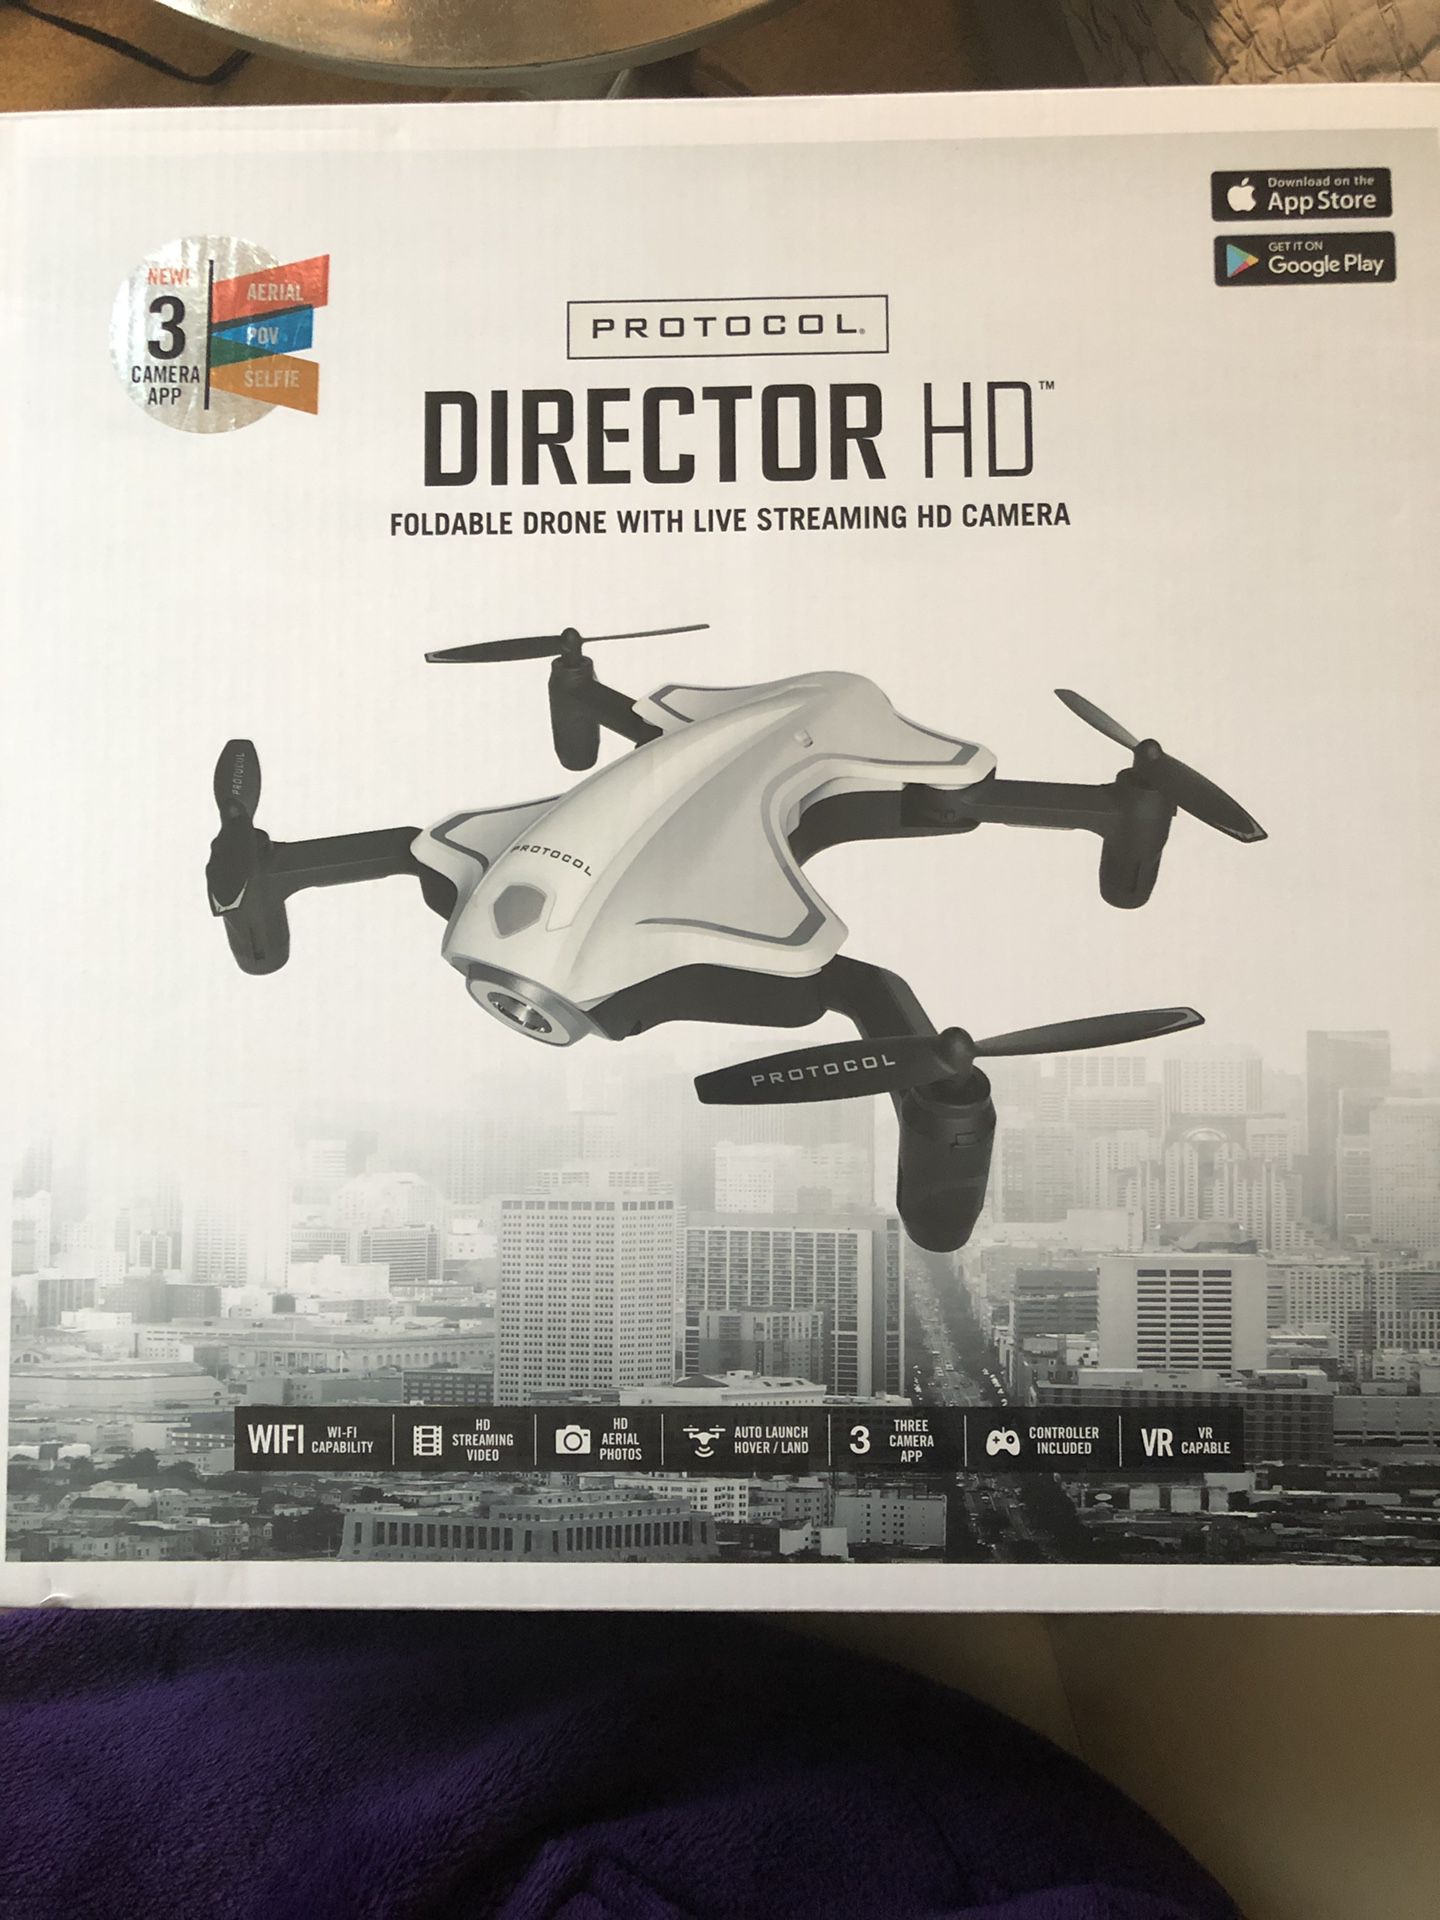 Brand New Protocol Director HD foldable Drone